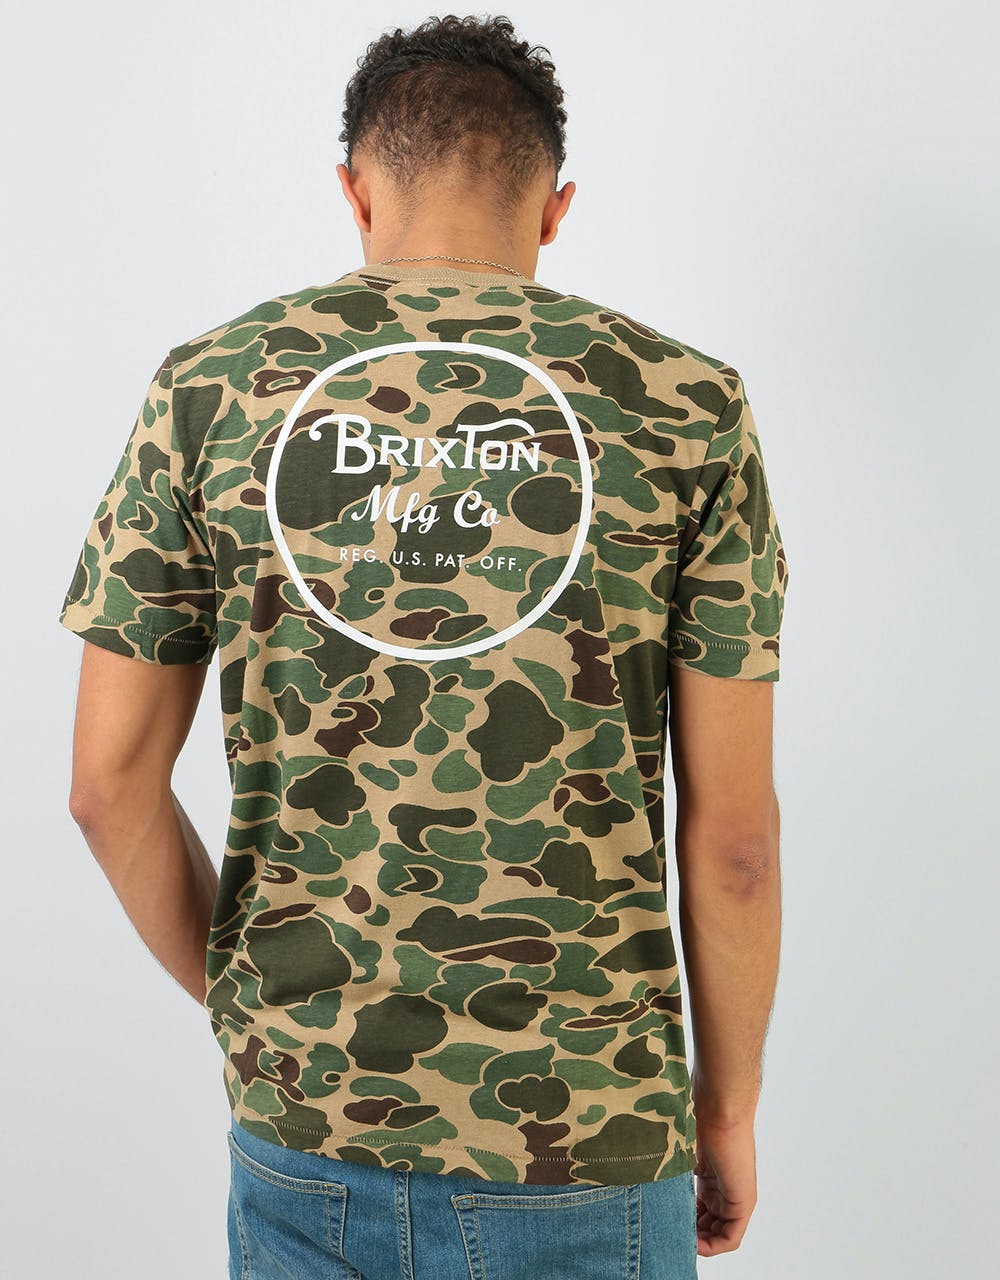 Brixton Wheeler Premium T-Shirt - Olive Camo